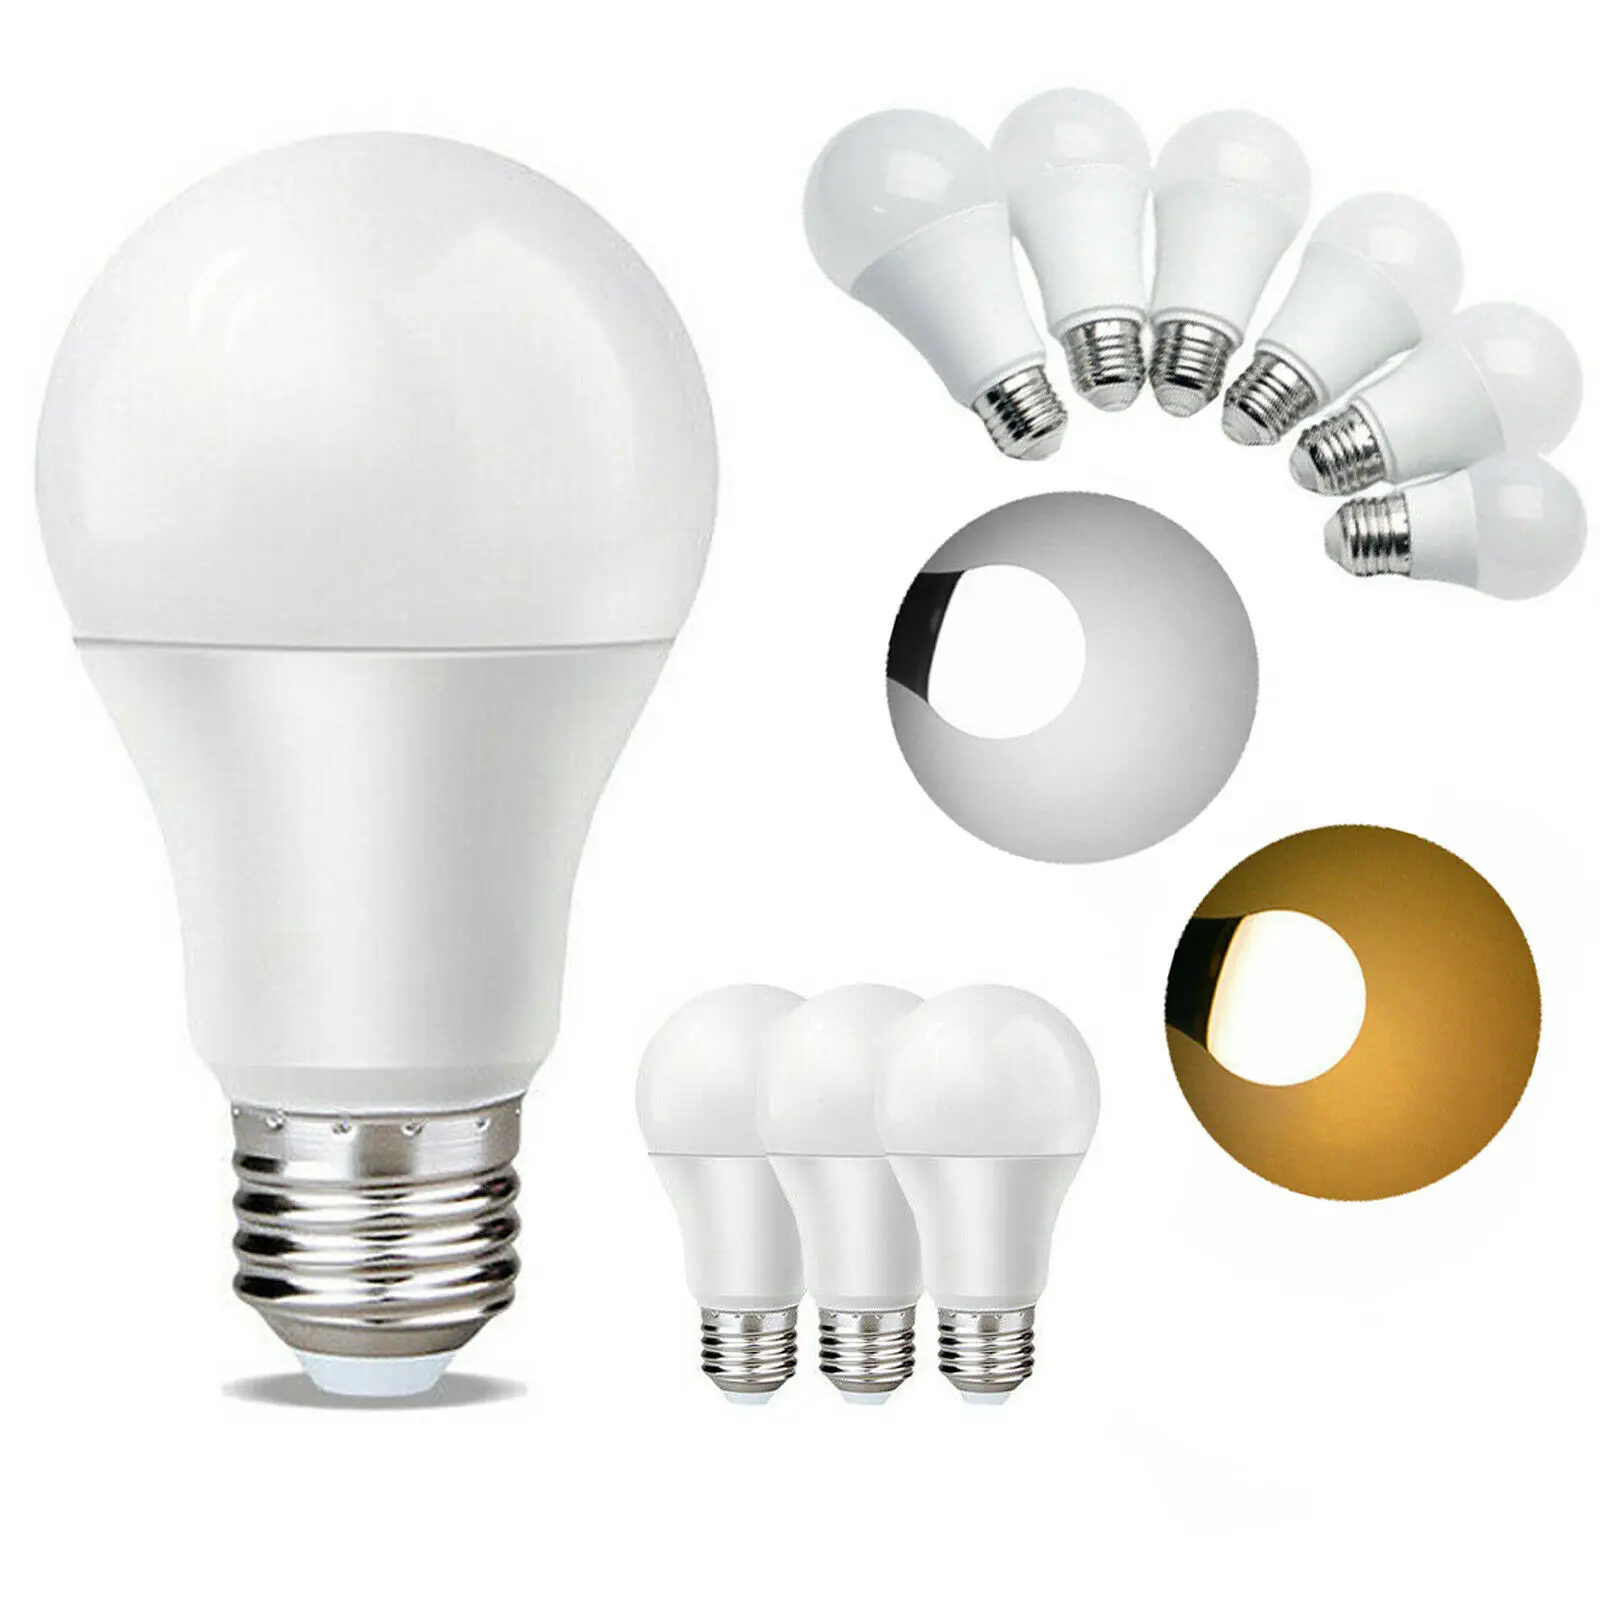 

Super Bright 220V E27 Screw Base Cool Warm White 3W 5W 7W 9W 12W 15W 18W 20W LED Globe Light Bulbs for Home Office Bedroom